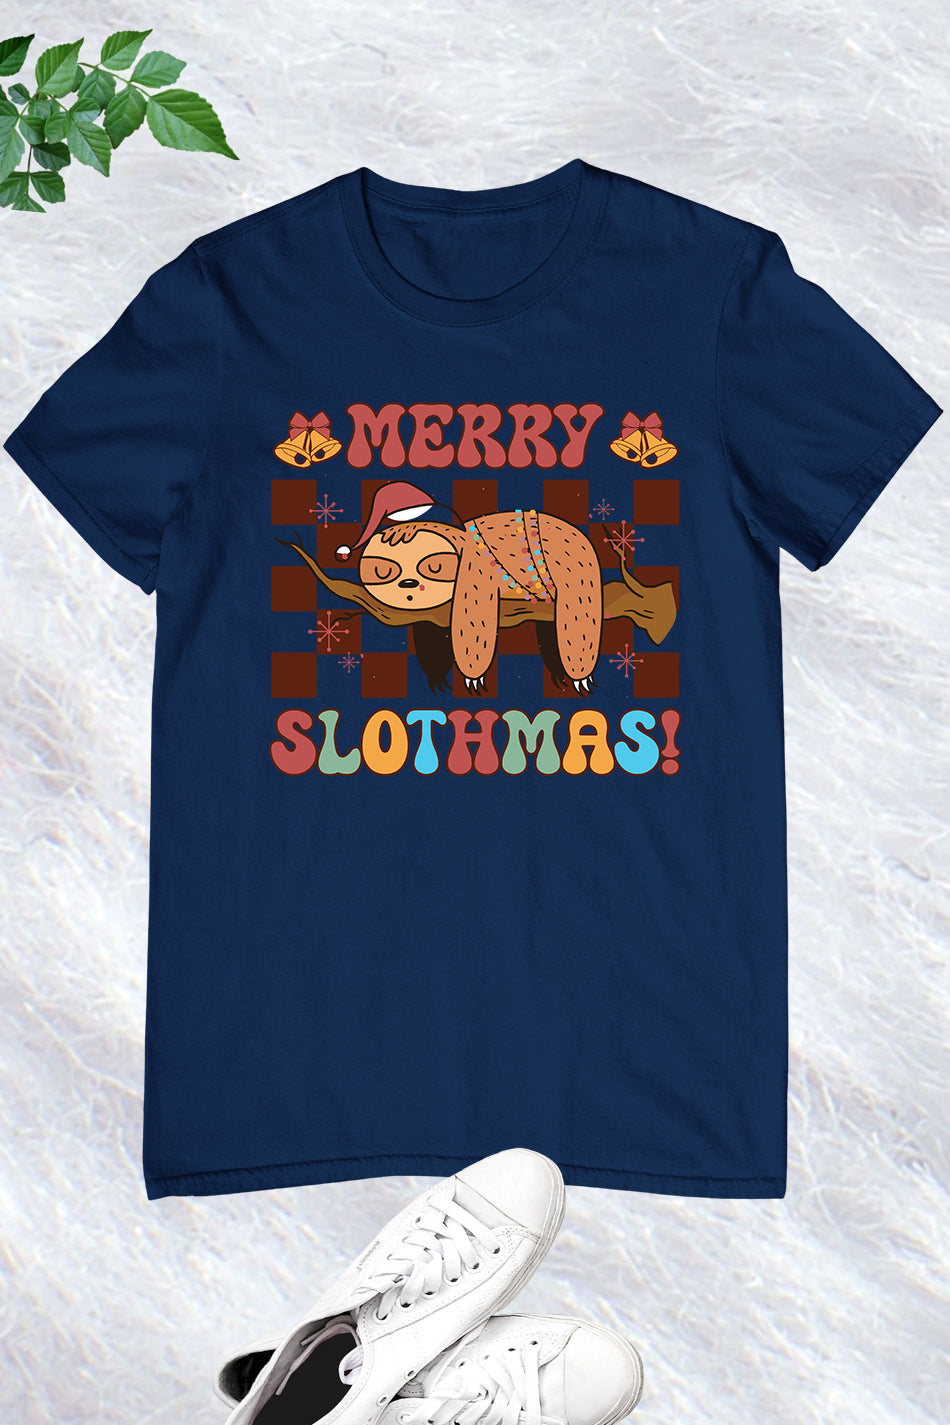 Merry Sloth MAs Funny Shirt